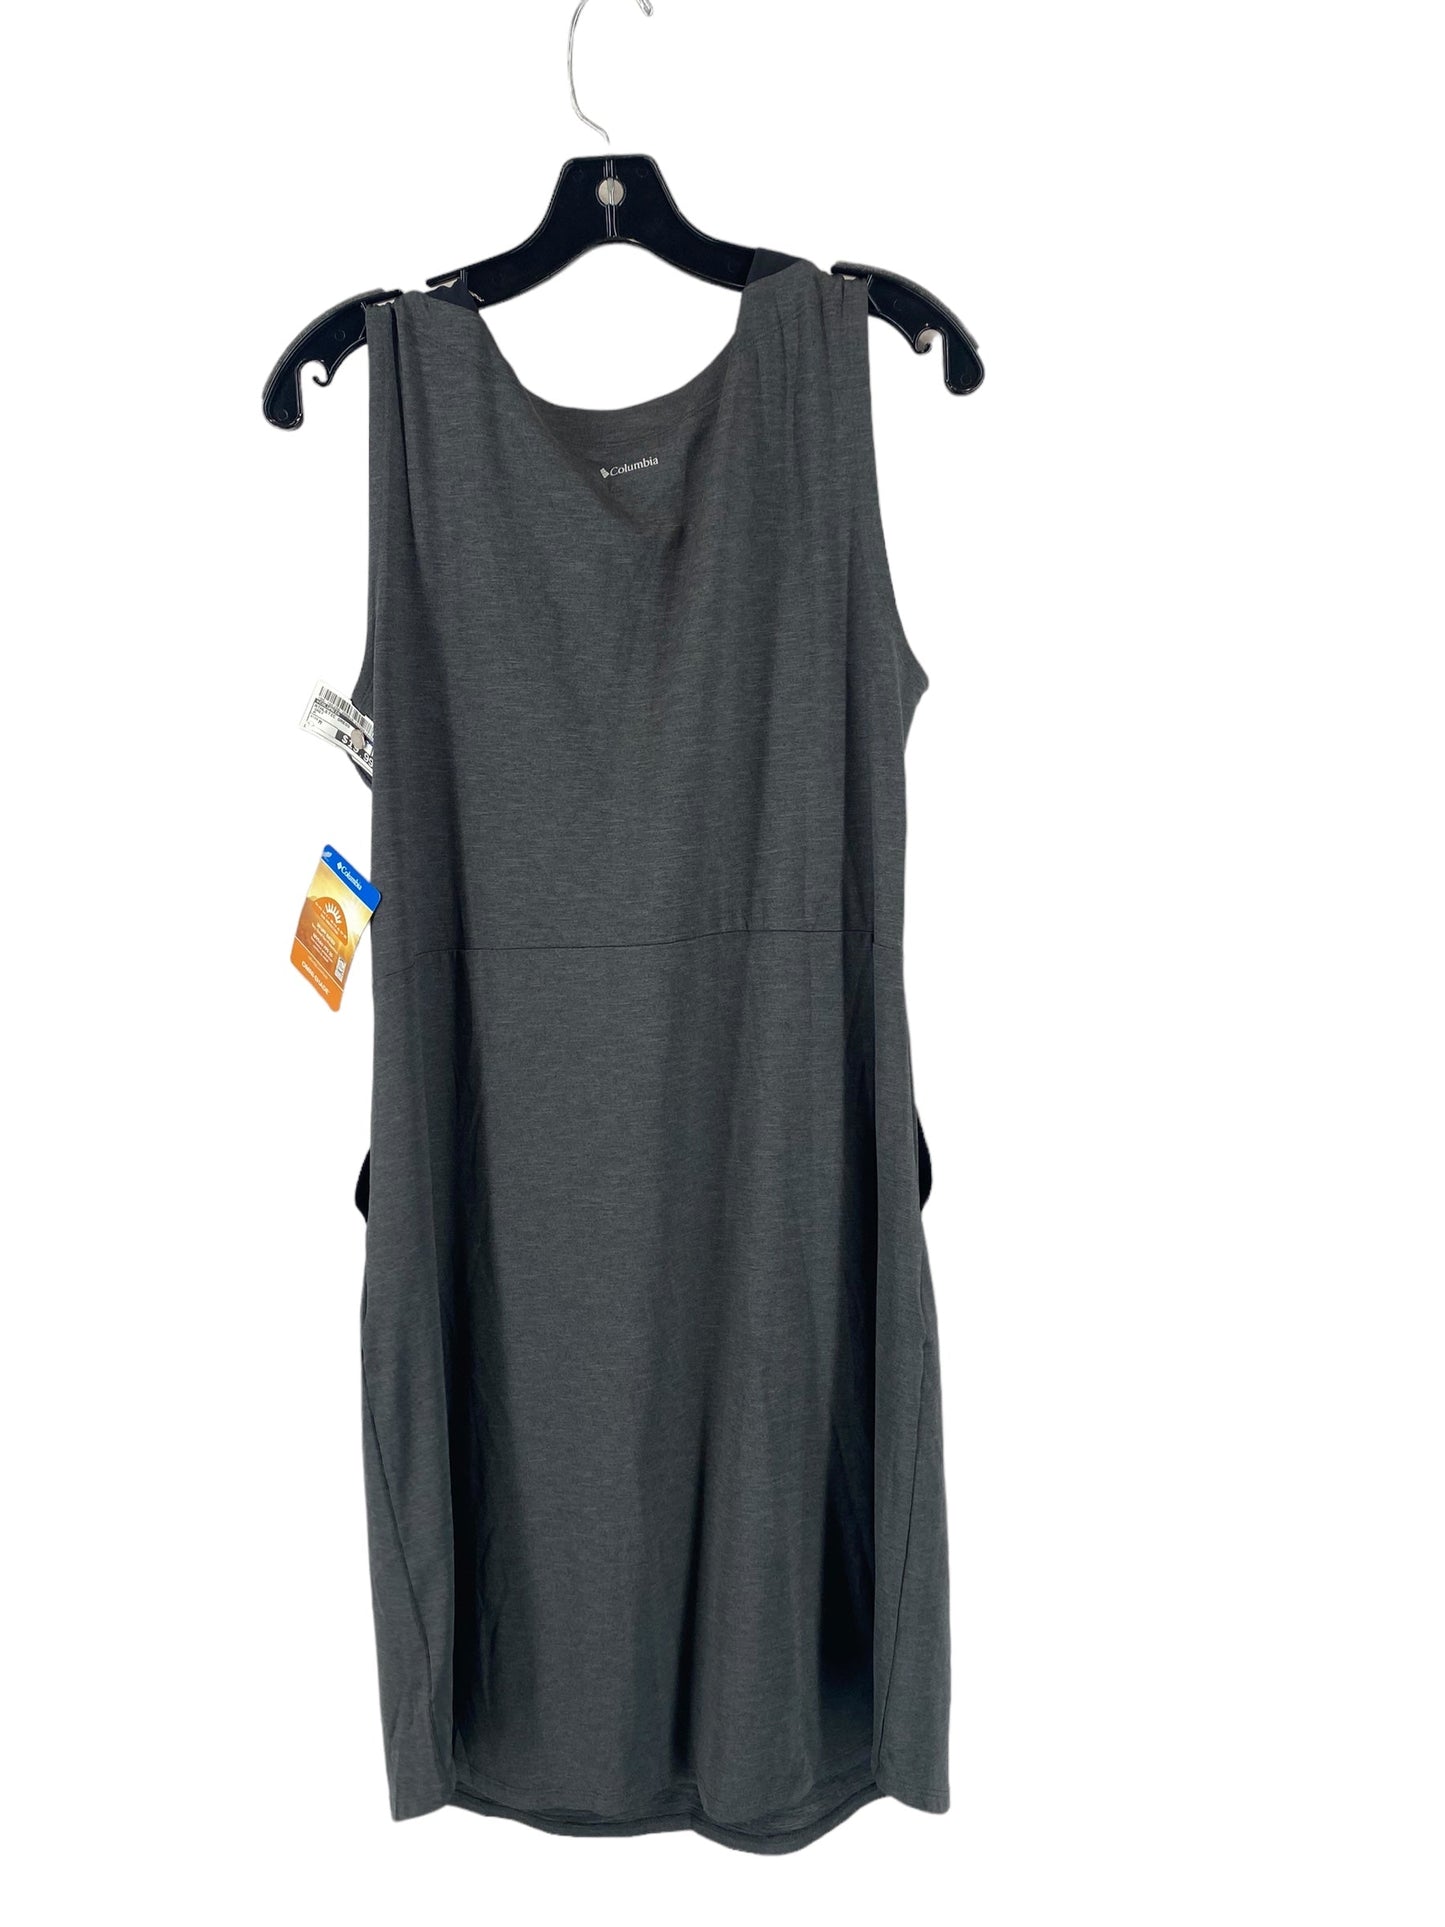 Grey Athletic Dress Columbia, Size M